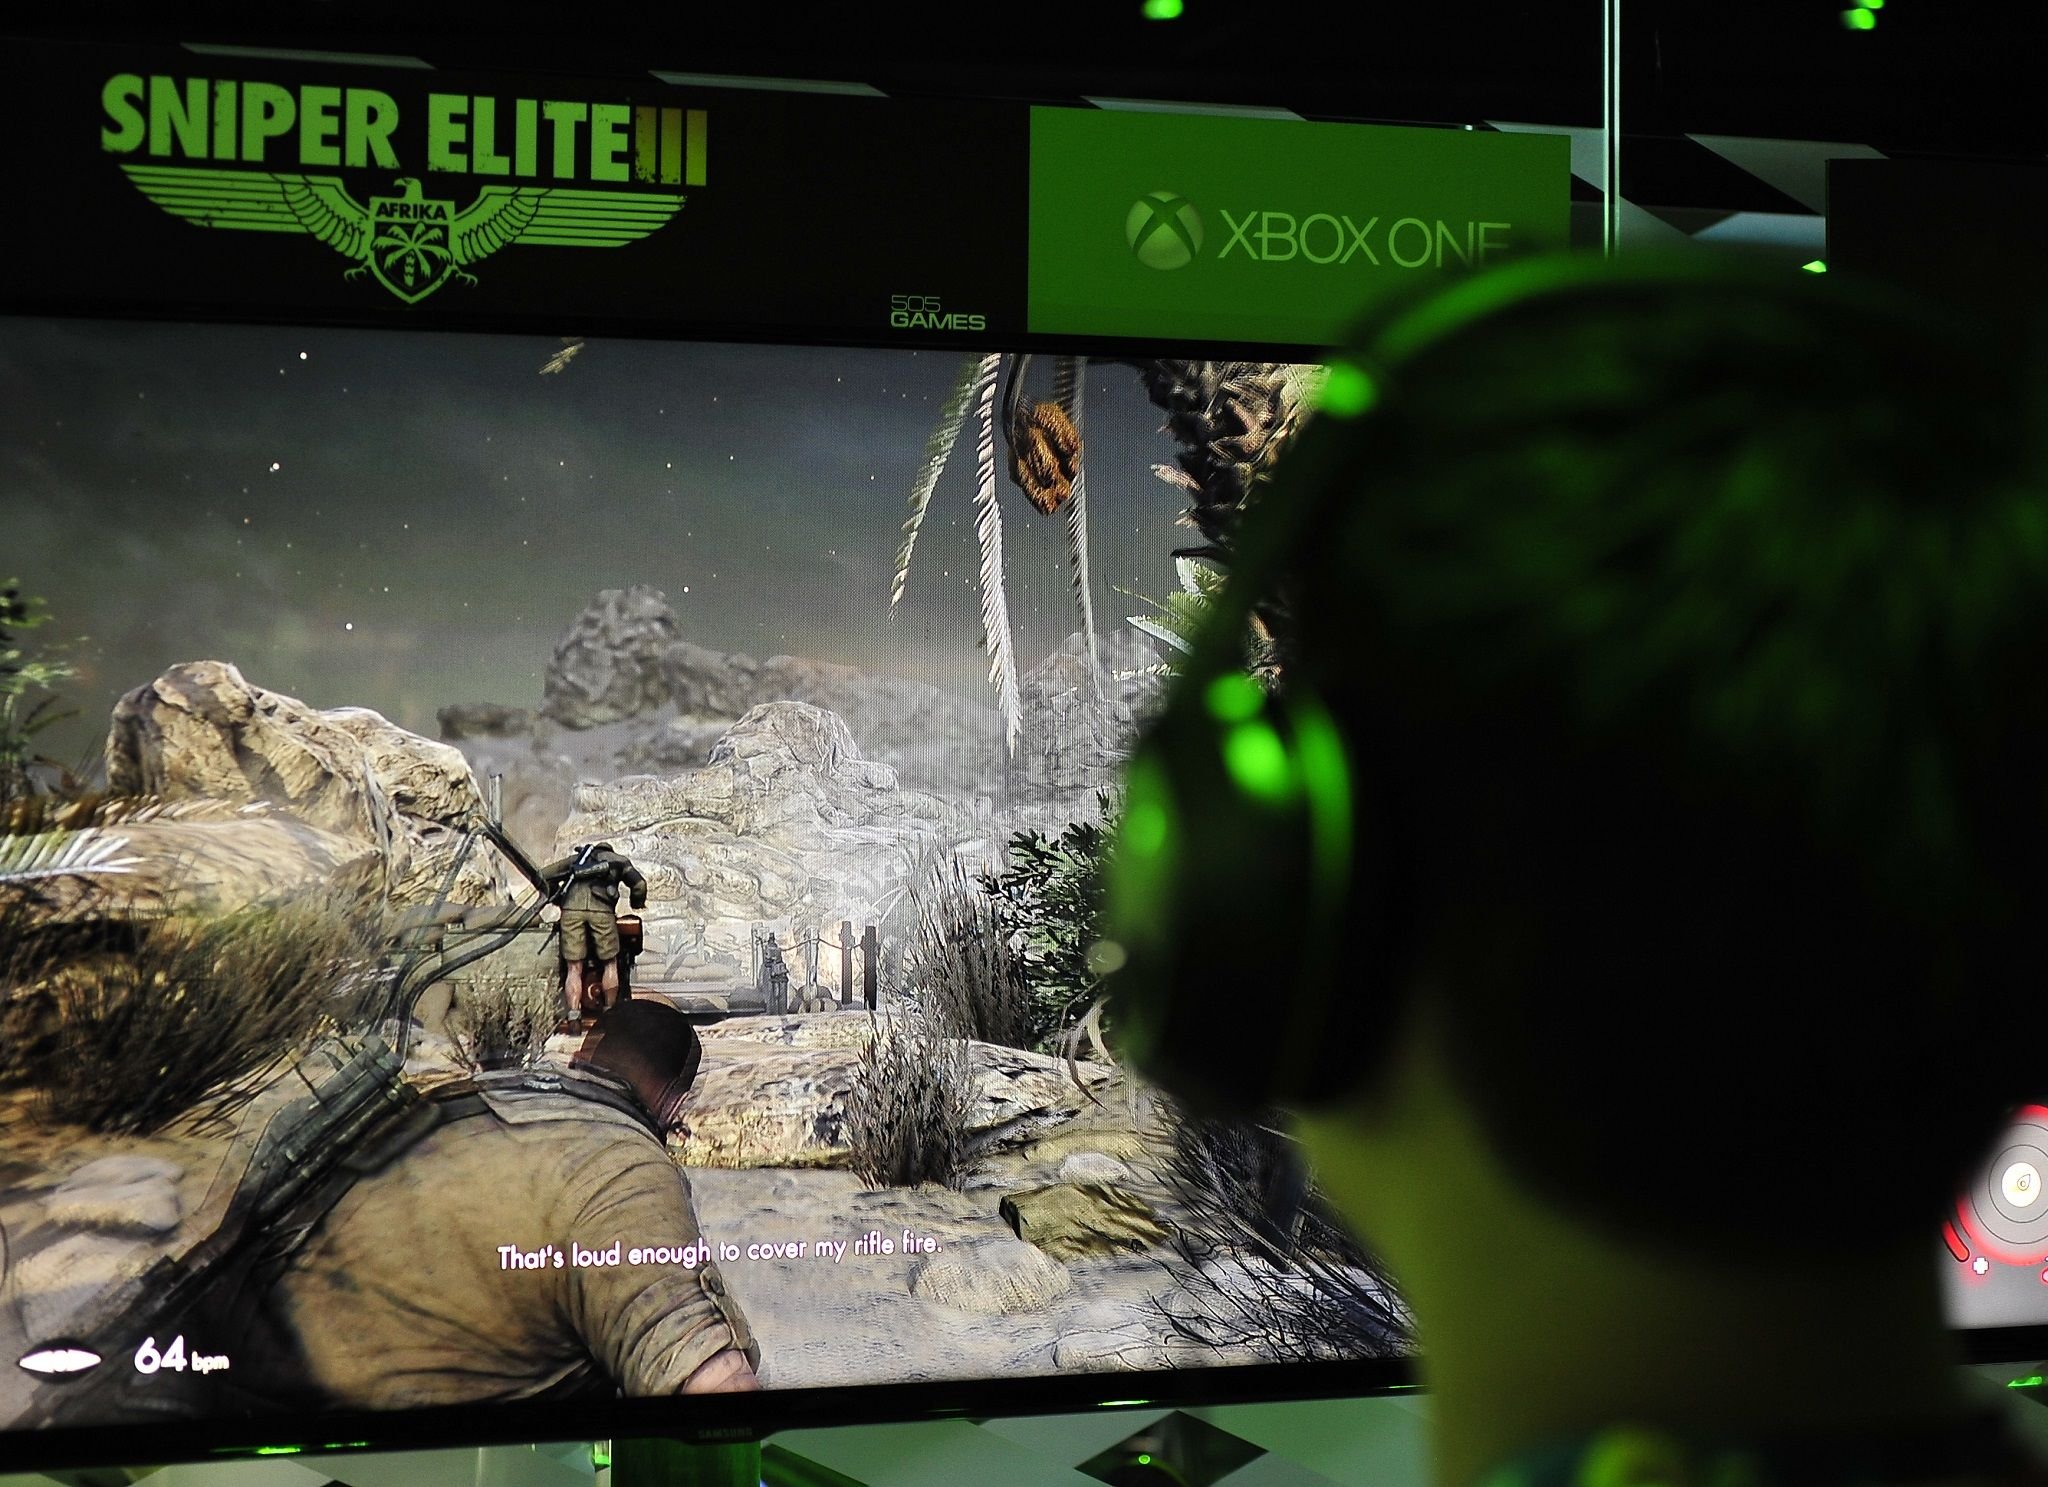 Sniper_elite_III_E3_photo.jpg